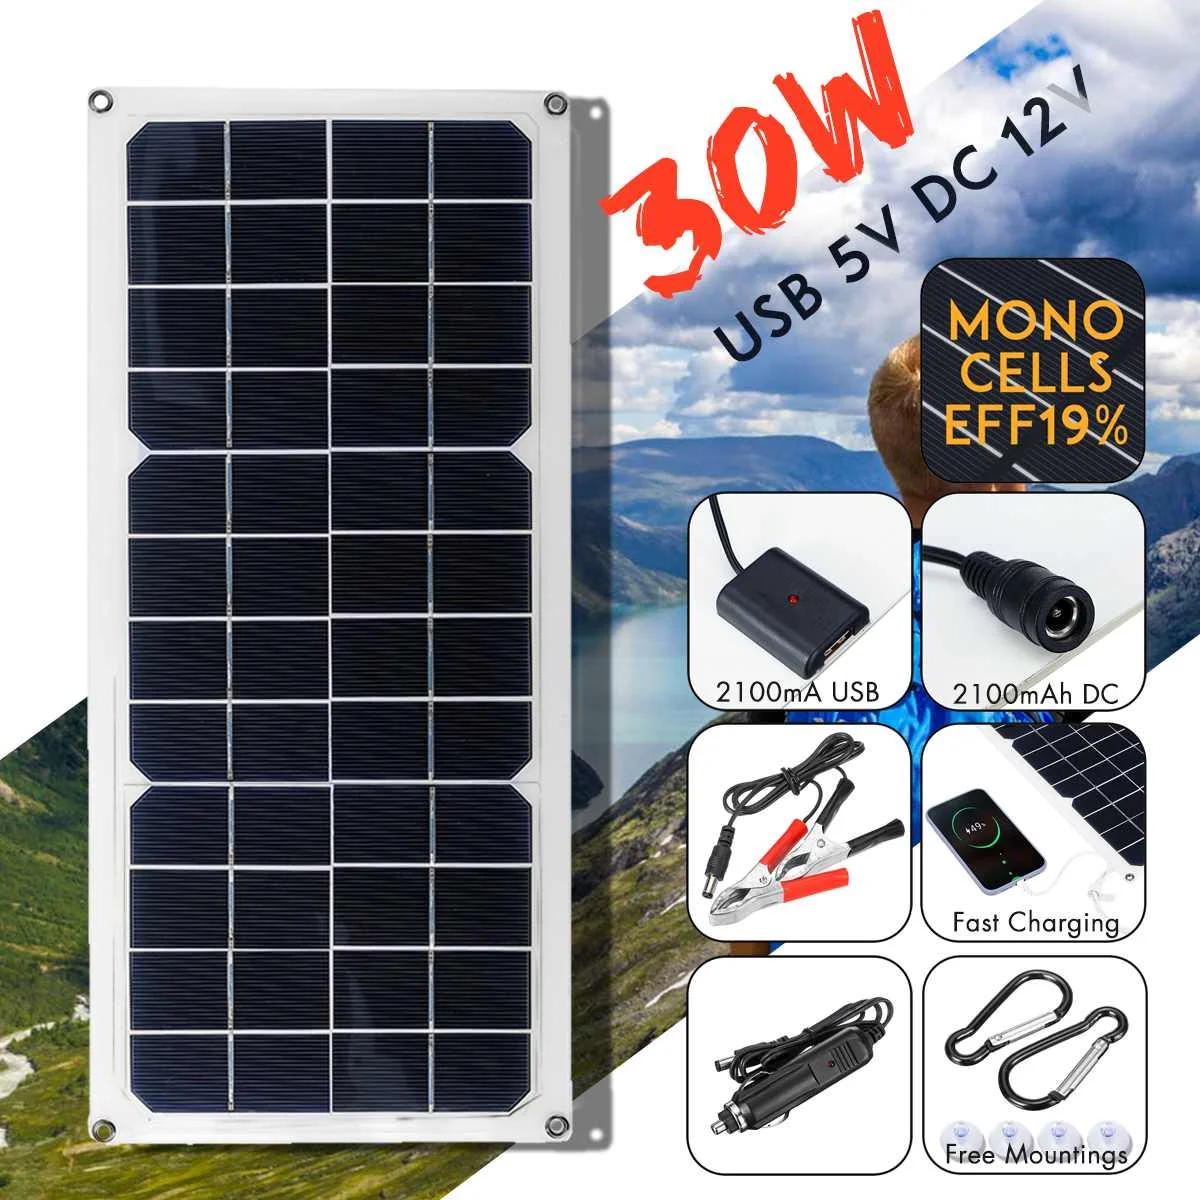 Solarmodul Solarpanel Solarzelle 30W ETFE Faltbares für Power Ladegerät Outdoors 